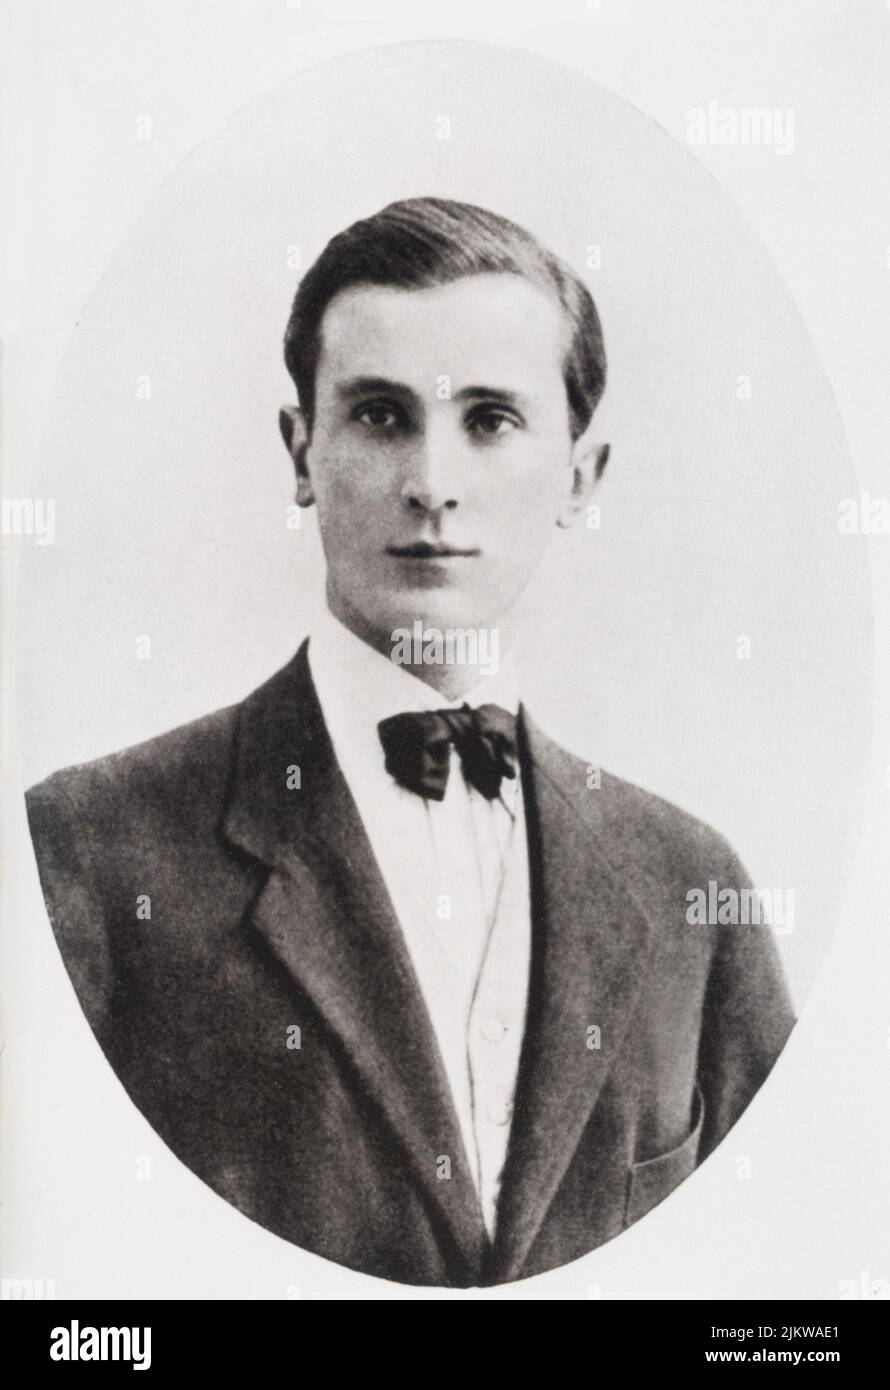 1909 , Oxford University , England  : The russian  prince FELIX YOUSSOUPOV (1887 - 1967 ) , killer of  celebrated russian priest Grigorij Efimovic RASPUTIN ( 1871 - 1916 )   - portrait - ritratto - cravatta - tie - papillon  - nobile russo - nobiltà russa - RUSSIA - nobility - royalty  - RASPOUTINE  ----  Archivio GBB Stock Photo